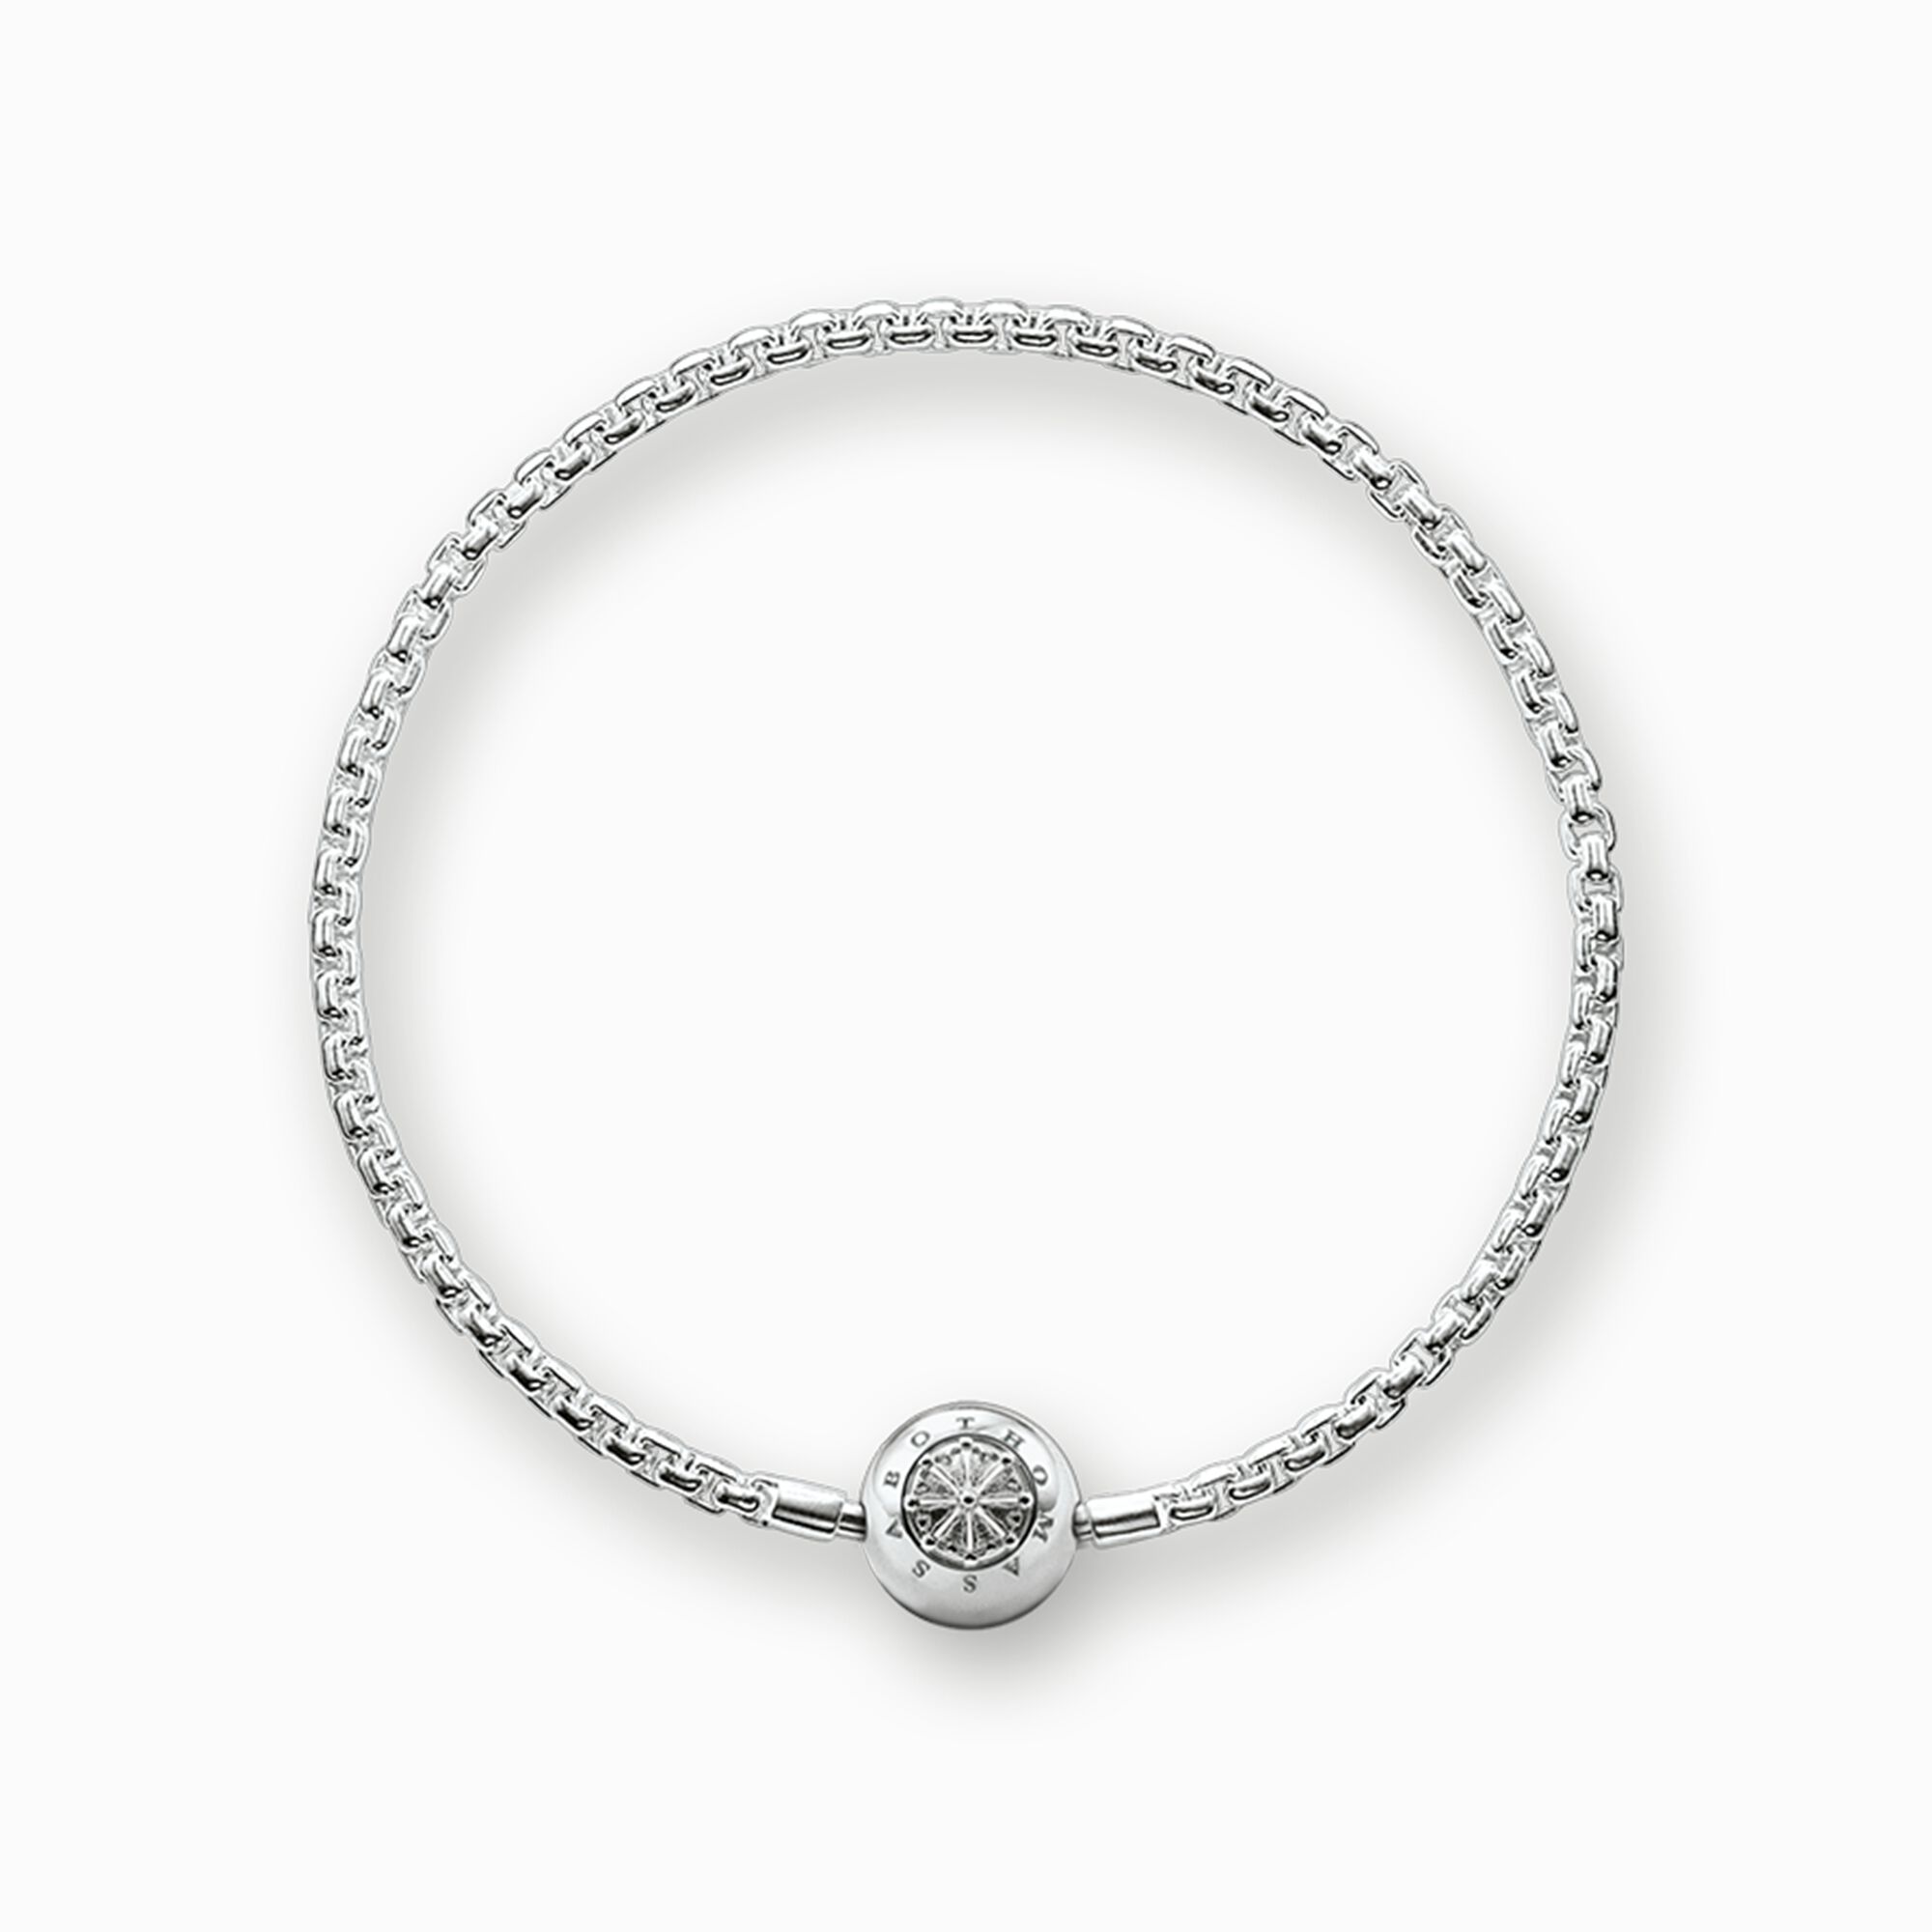 Bracelet for Beads | Sterling Silver | THOMAS SABO | Silberarmbänder